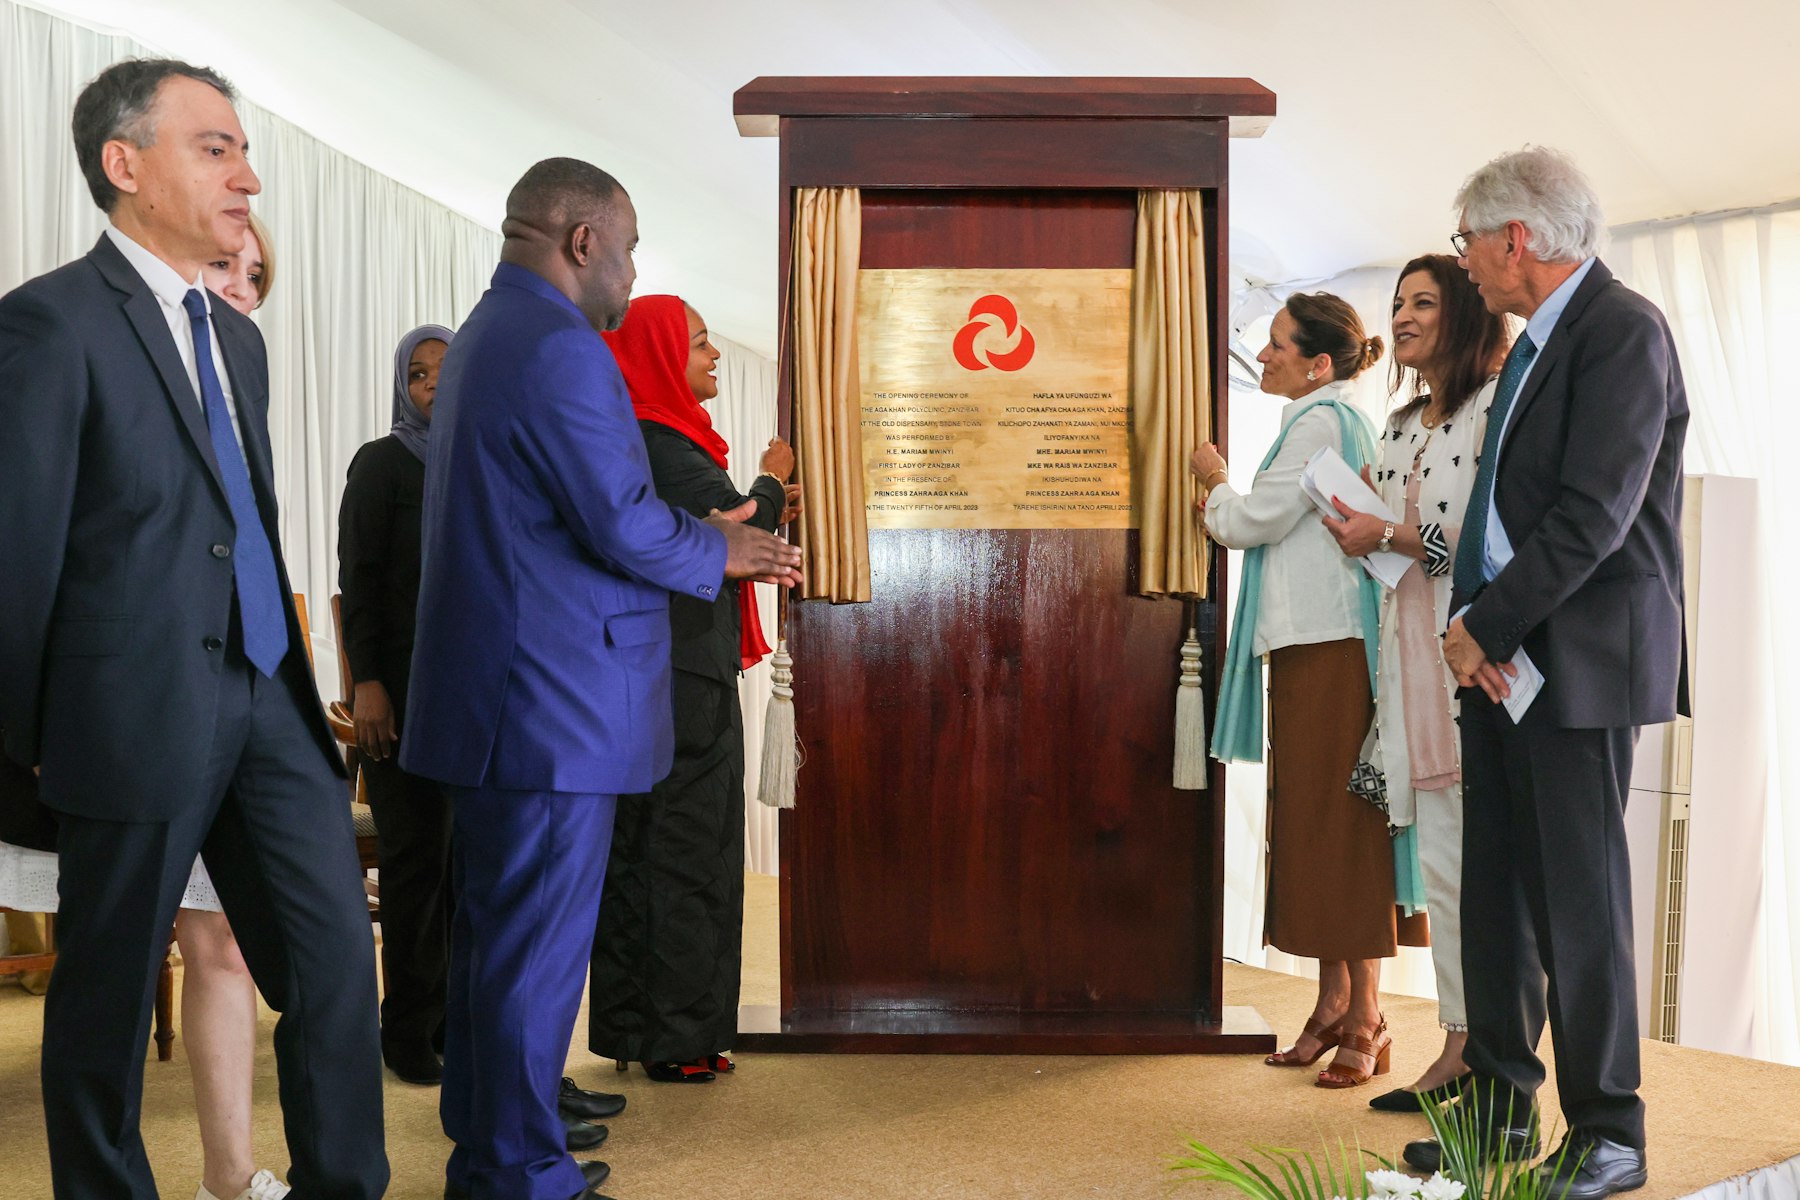 Princess Zahra and the First Lady of Zanzibar, Her Excellency Mariam Mwinyi, inaugurate the Aga Khan Polyclinic in Stone Town, Zanzibar